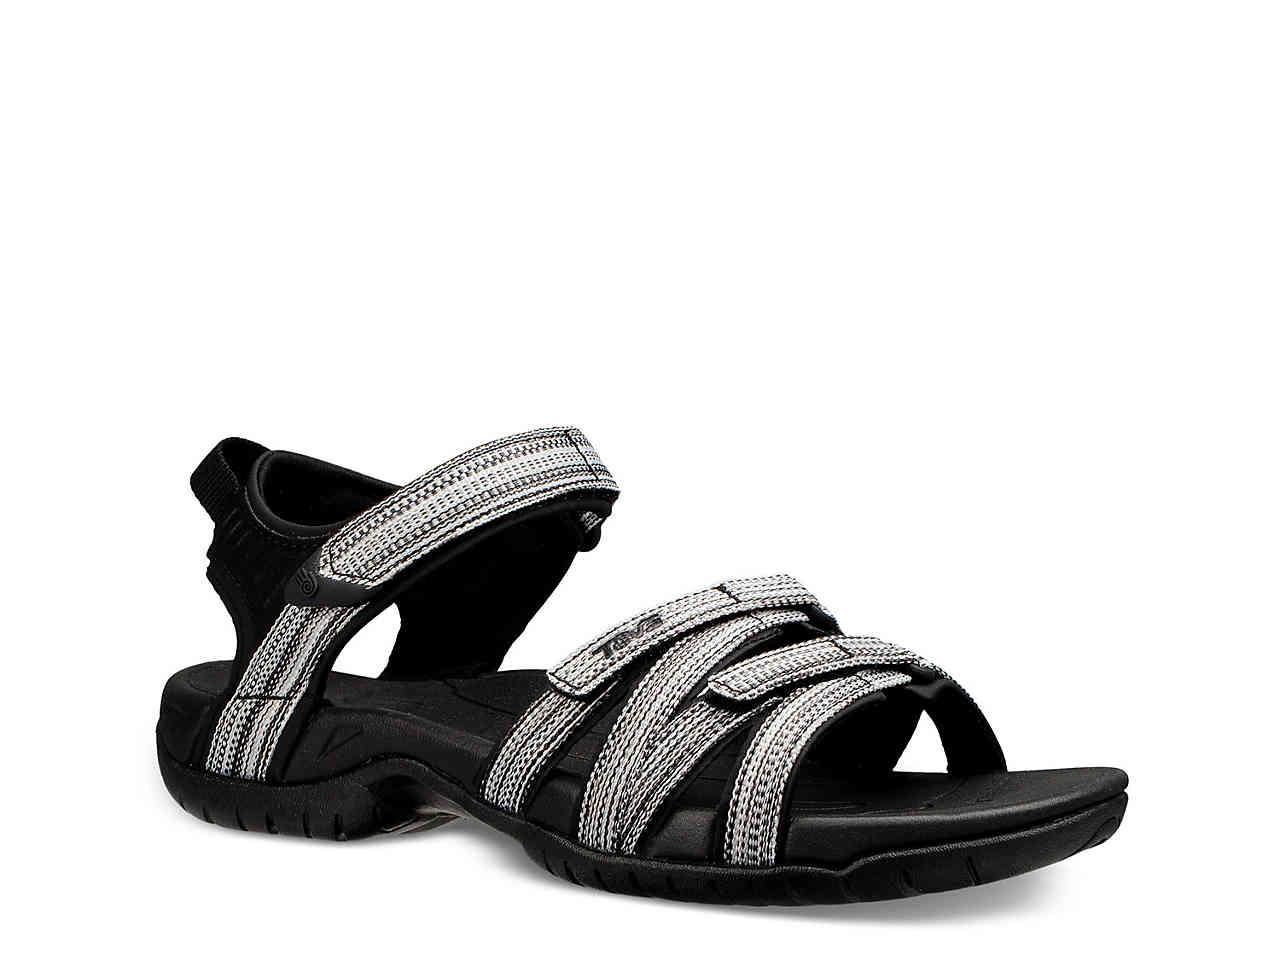 Teva Synthetic Tirra Sport Sandal in Black/White (Black) - Save 34% - Lyst